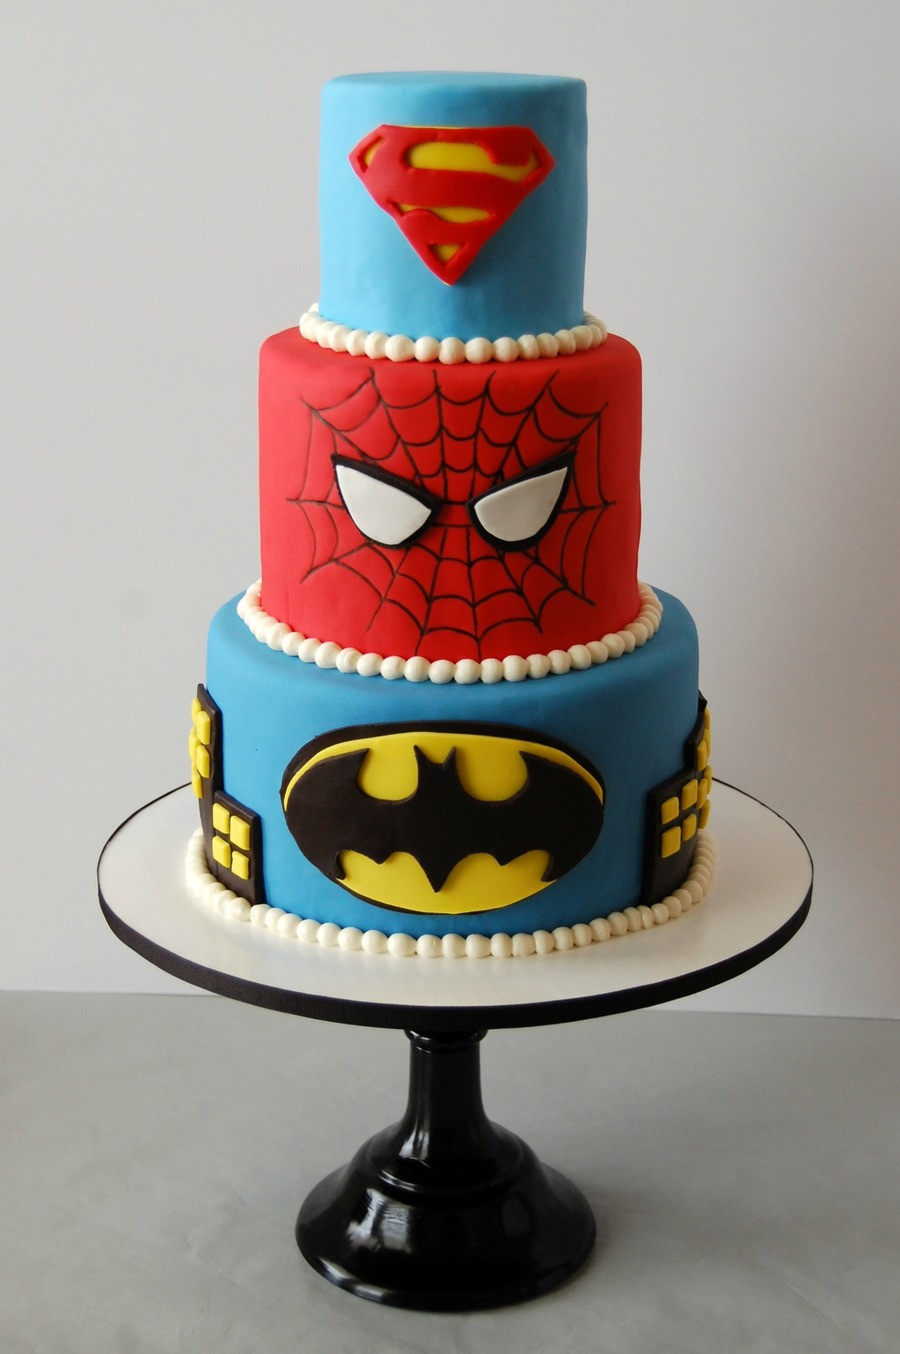 Best ideas about Super Hero Birthday Cake
. Save or Pin Superhero Birthday Cake CakeCentral Now.